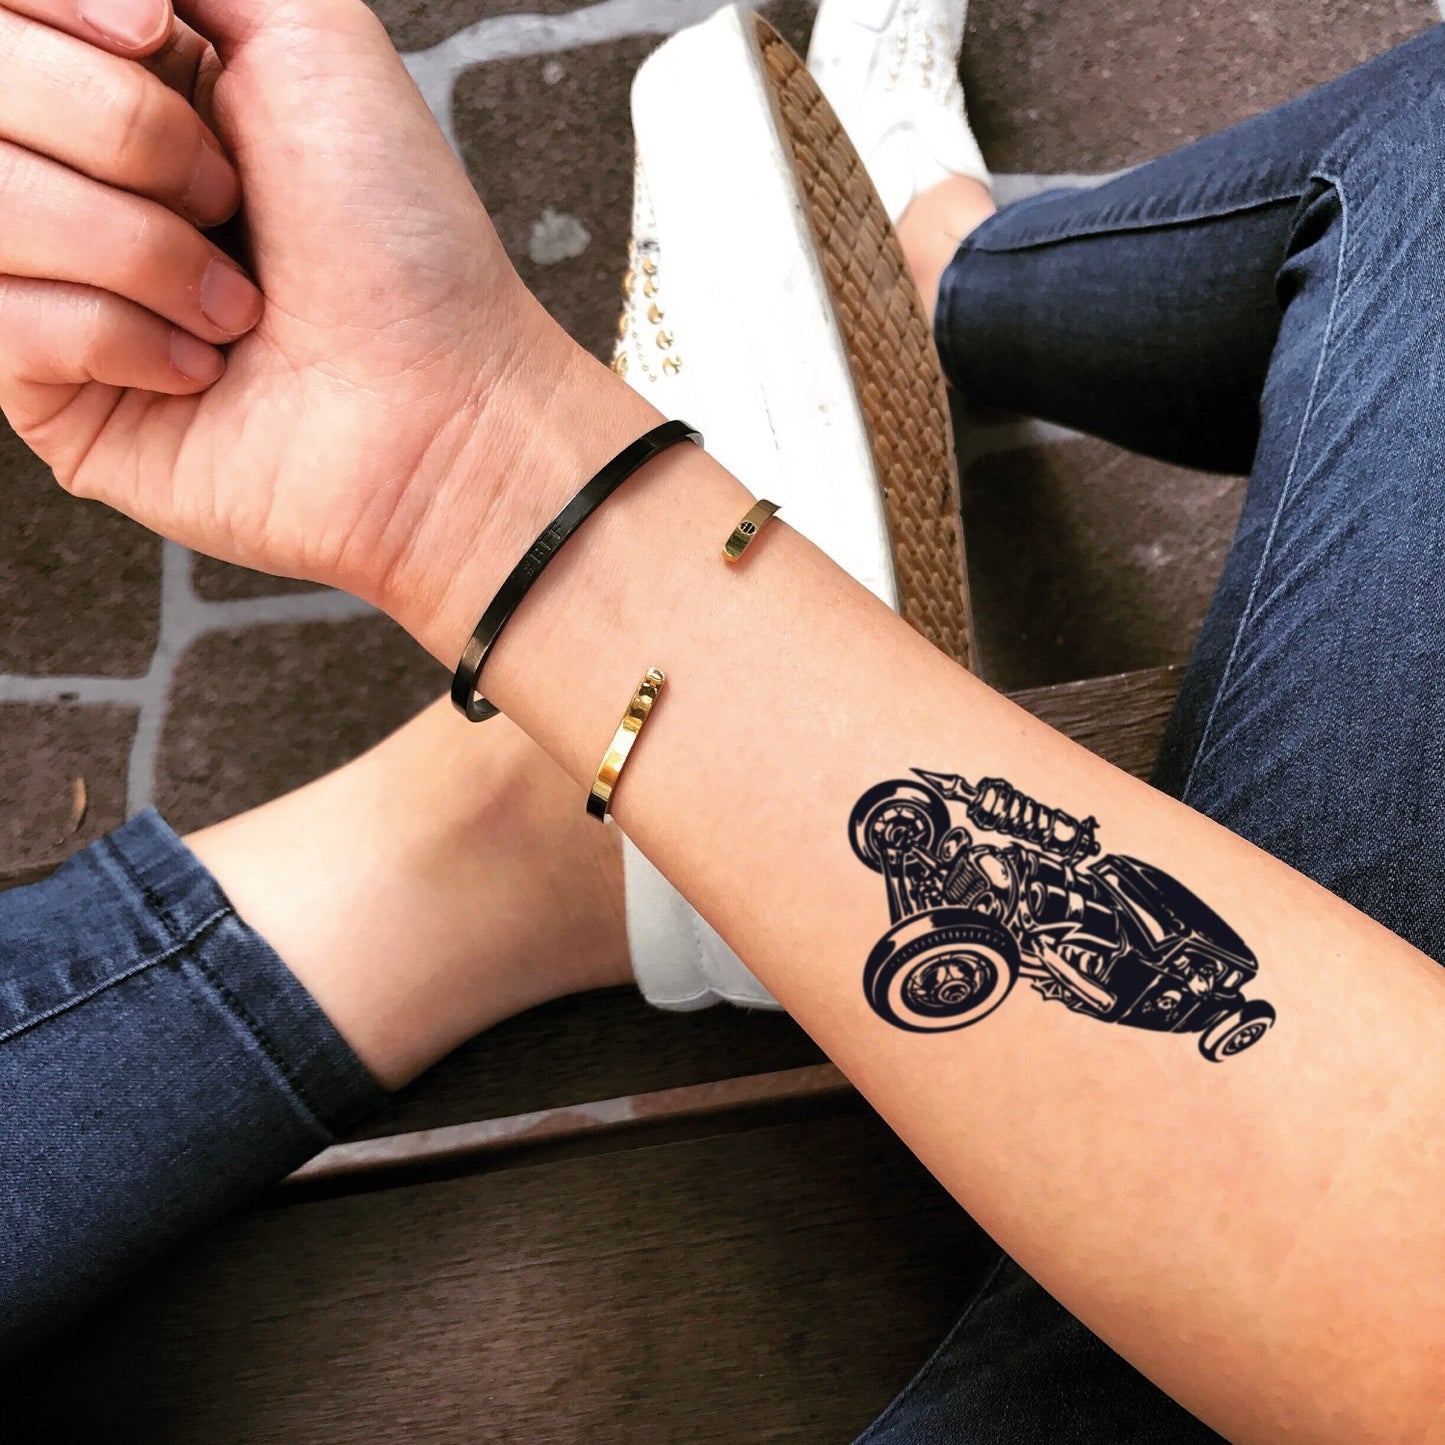 fake small hot rat rod illustrative temporary tattoo sticker design idea on forearm